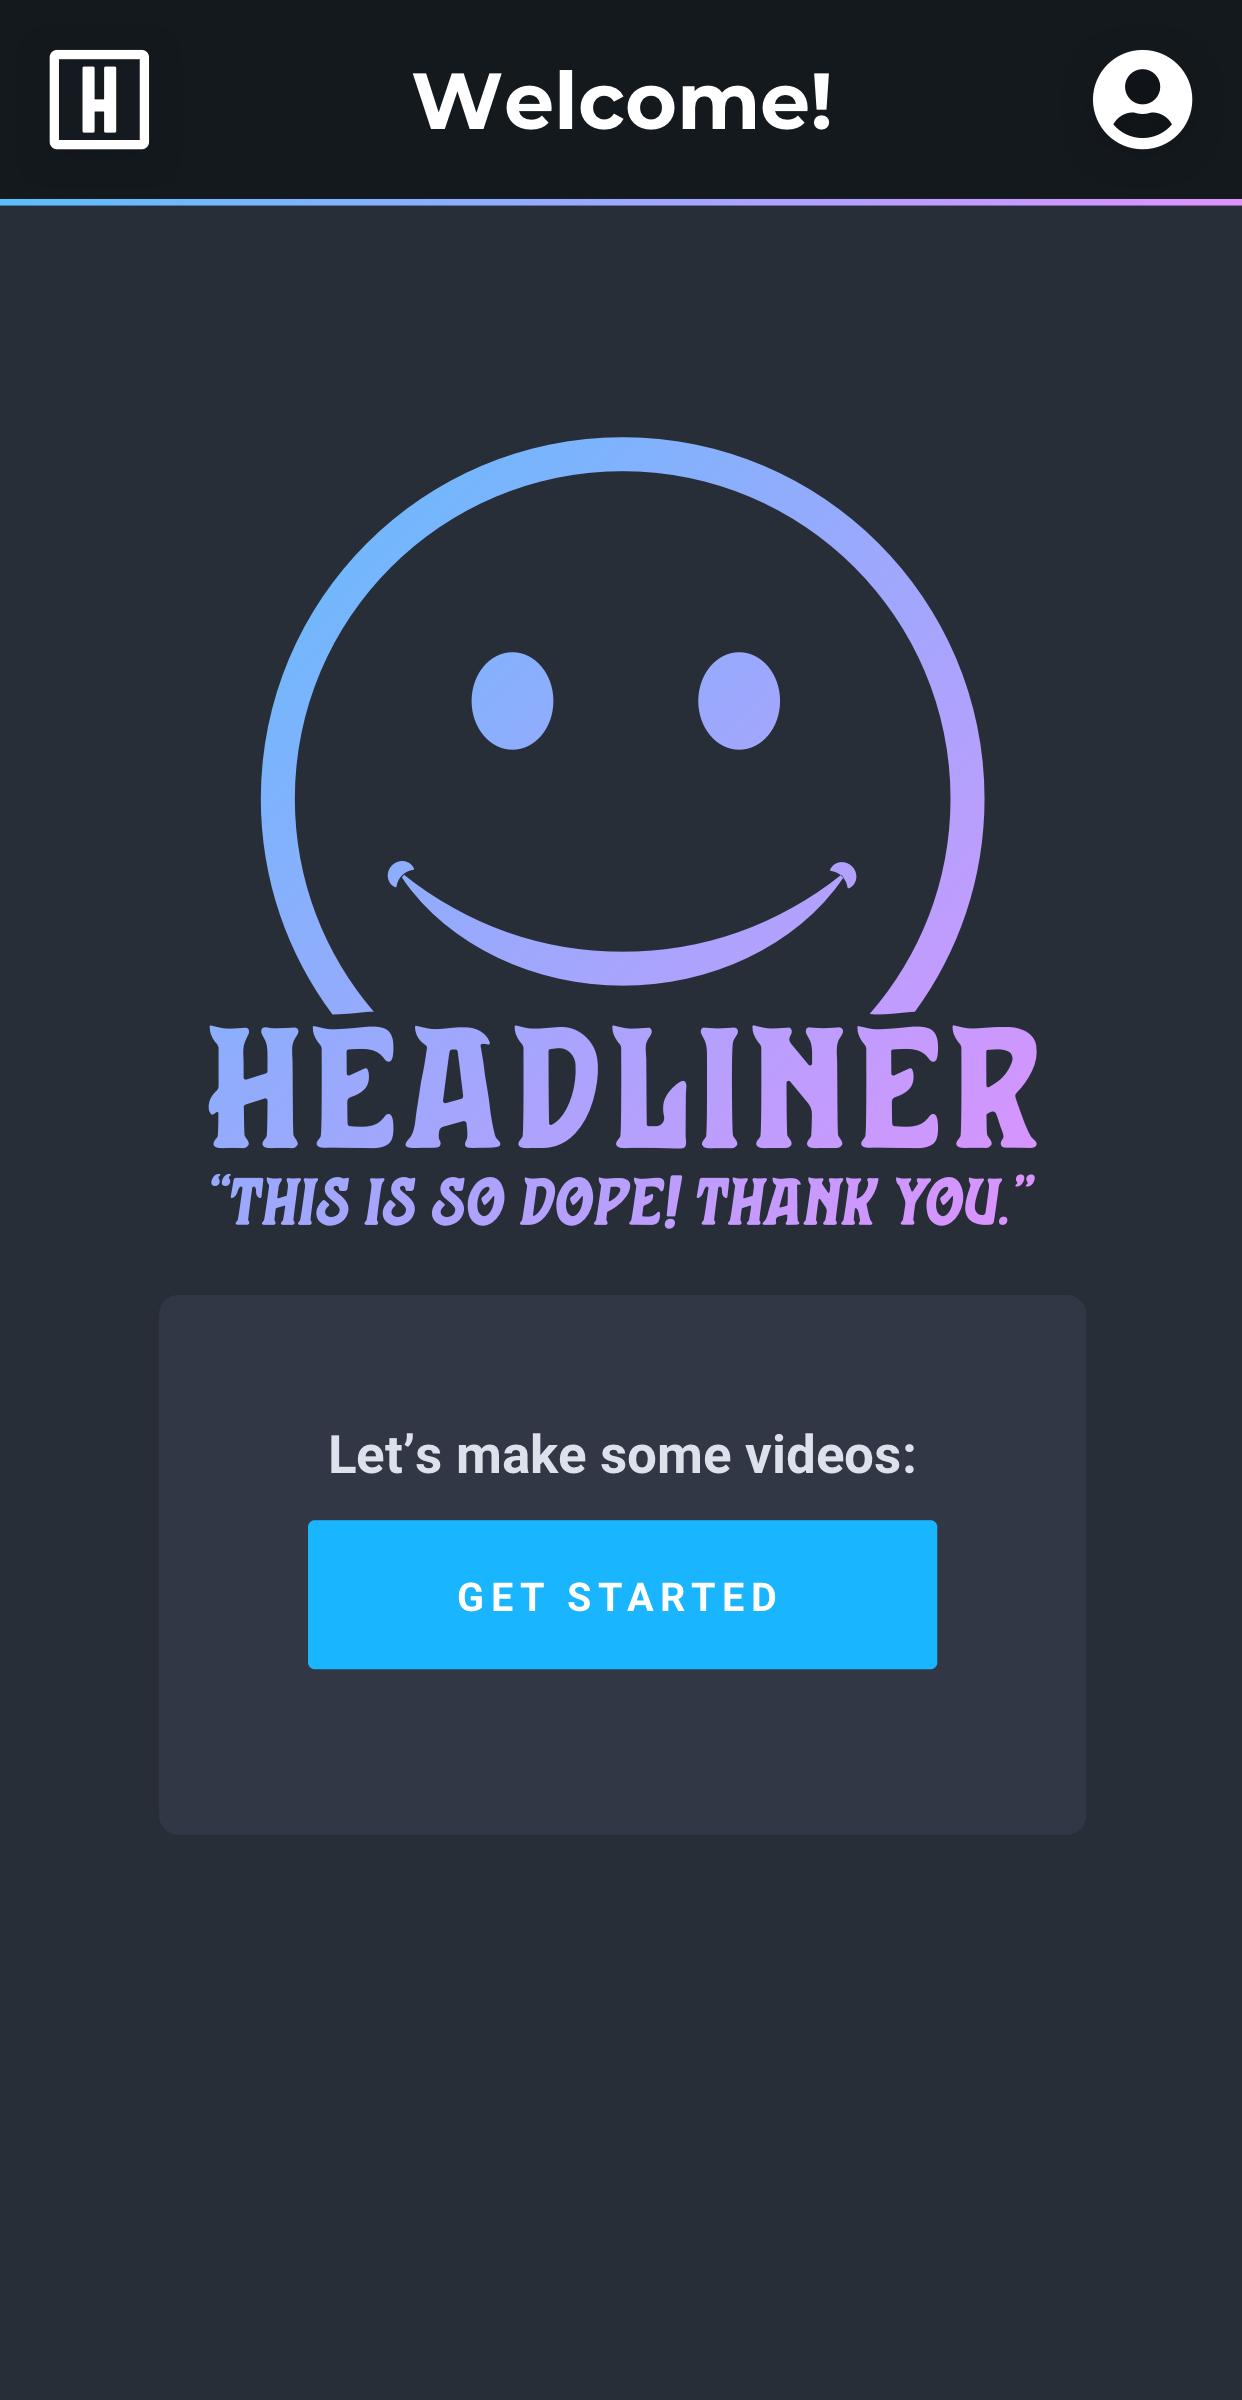 Headliner Create & Share Podcast Videos 5.3.0 Screenshot 1